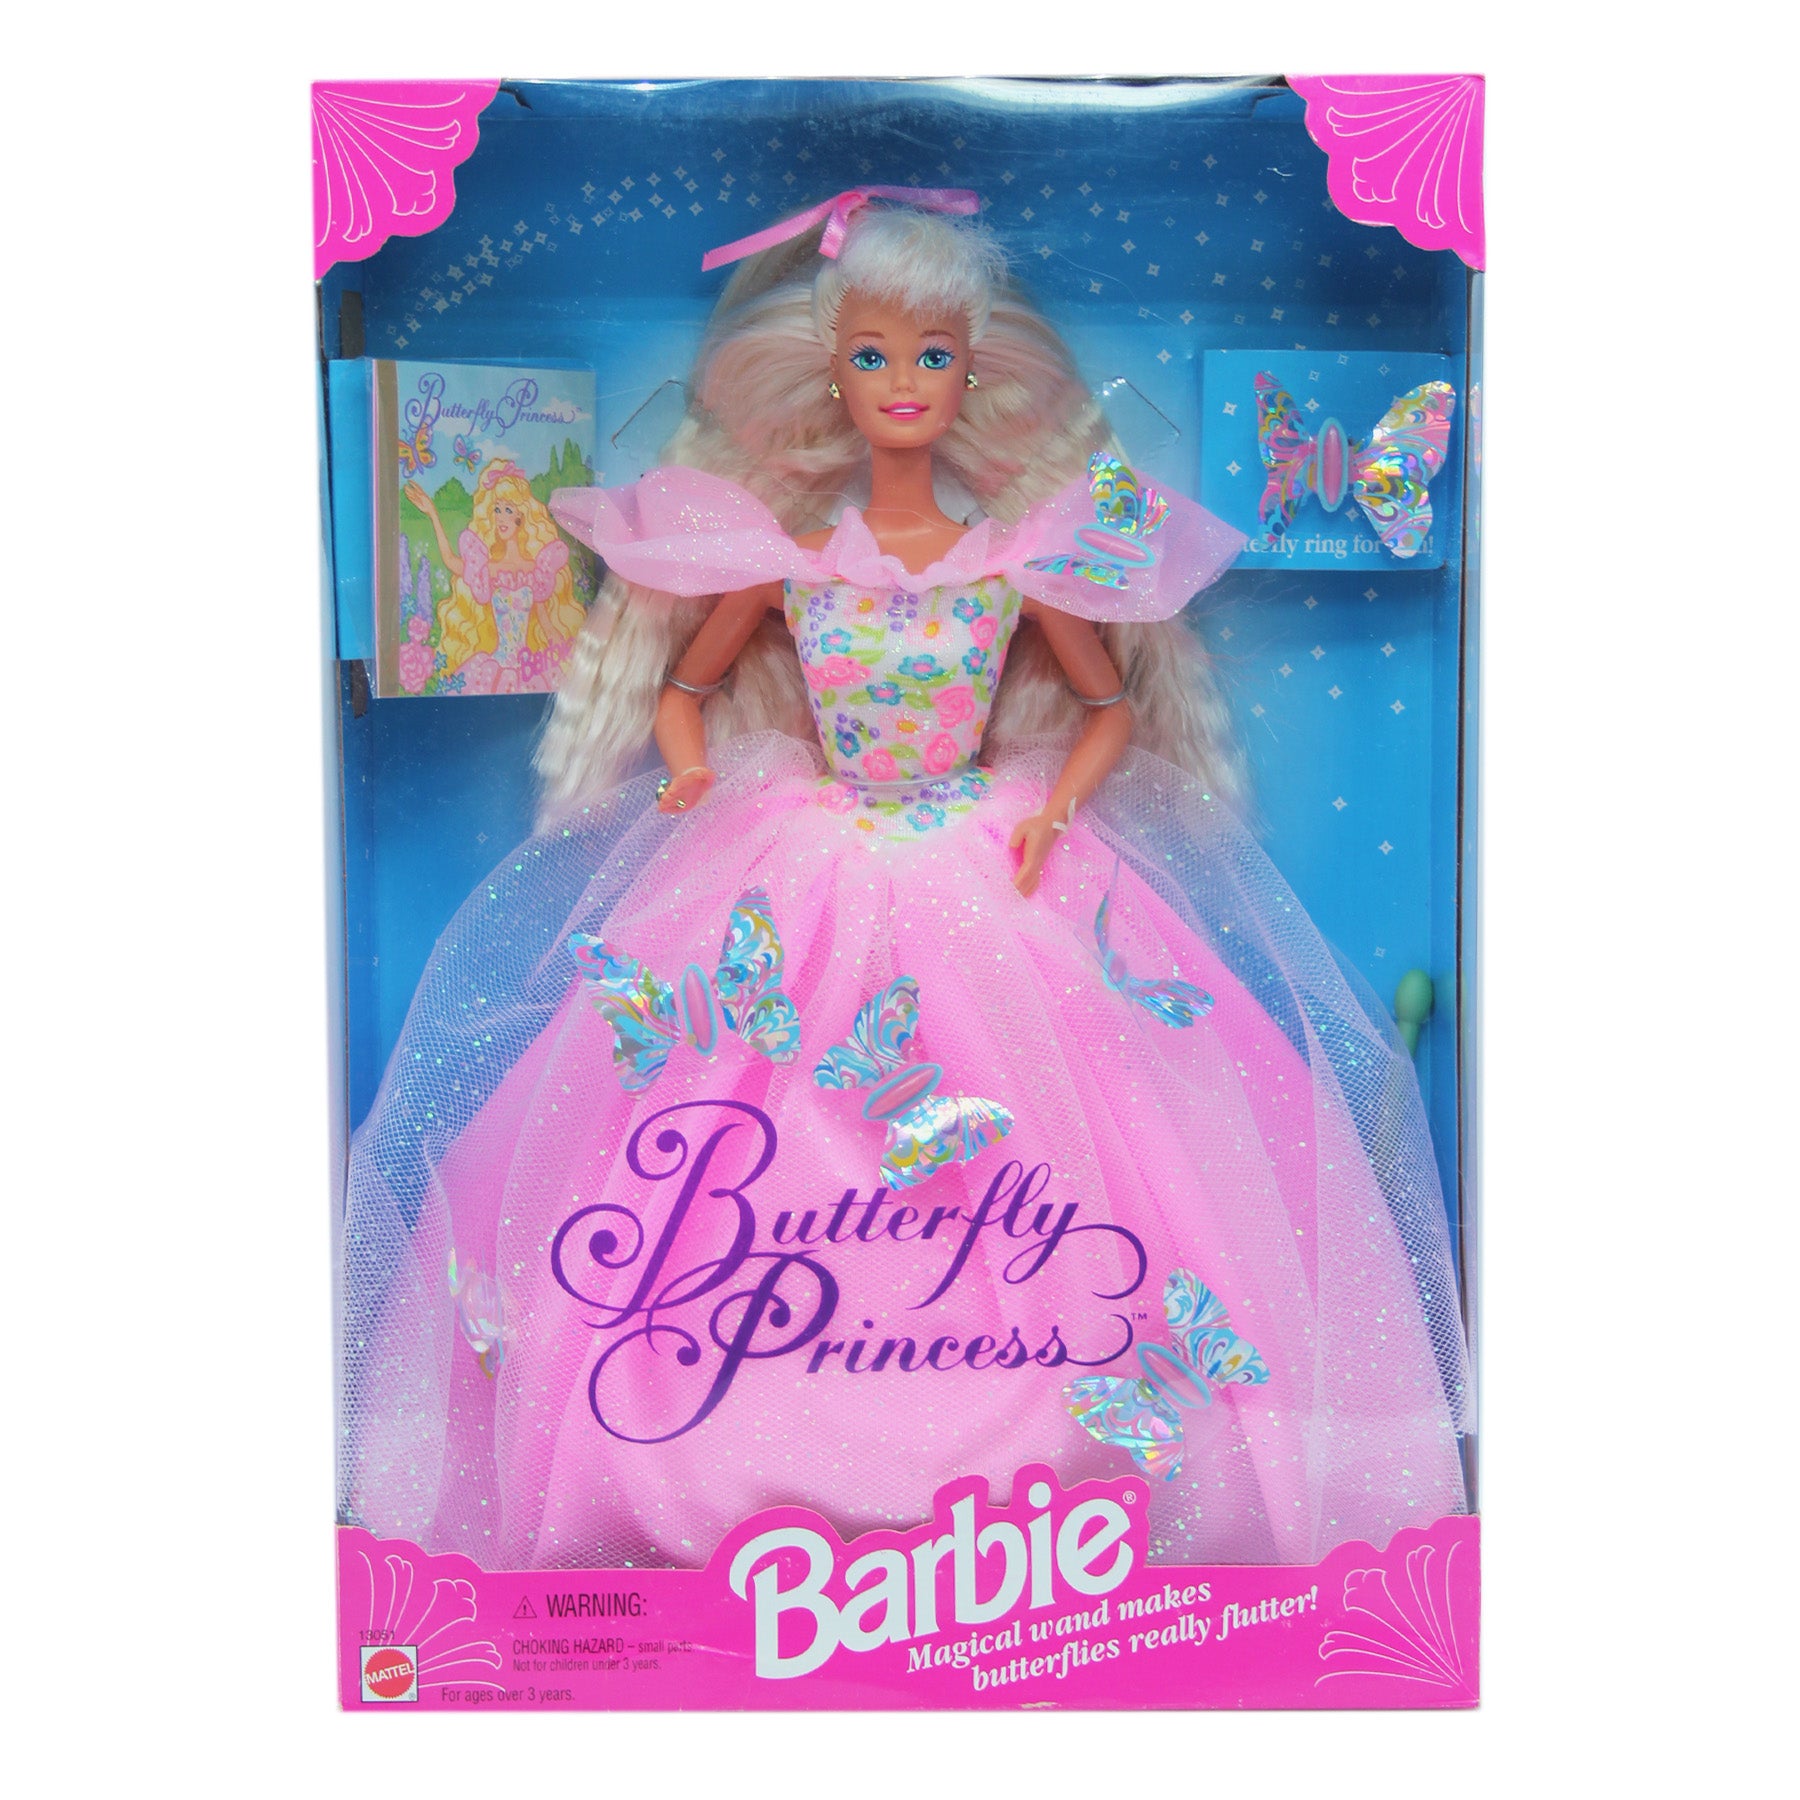 1994 Butterfly Princess Barbie (13051)